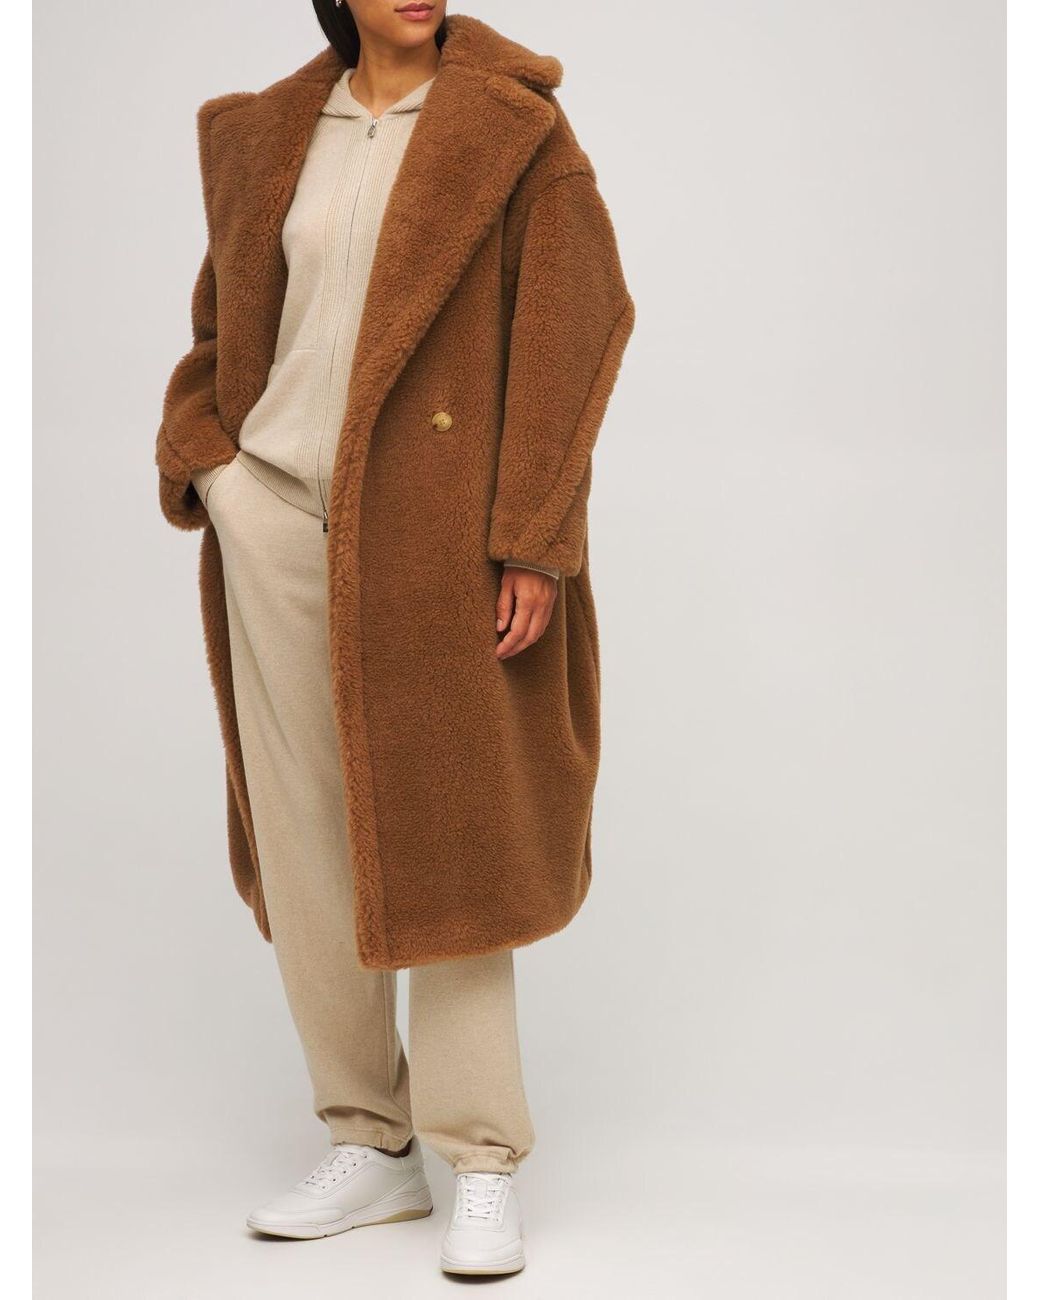 Max Mara Silk Teddy Bear Icon Coat in Camel (Natural) - Save 63% | Lyst